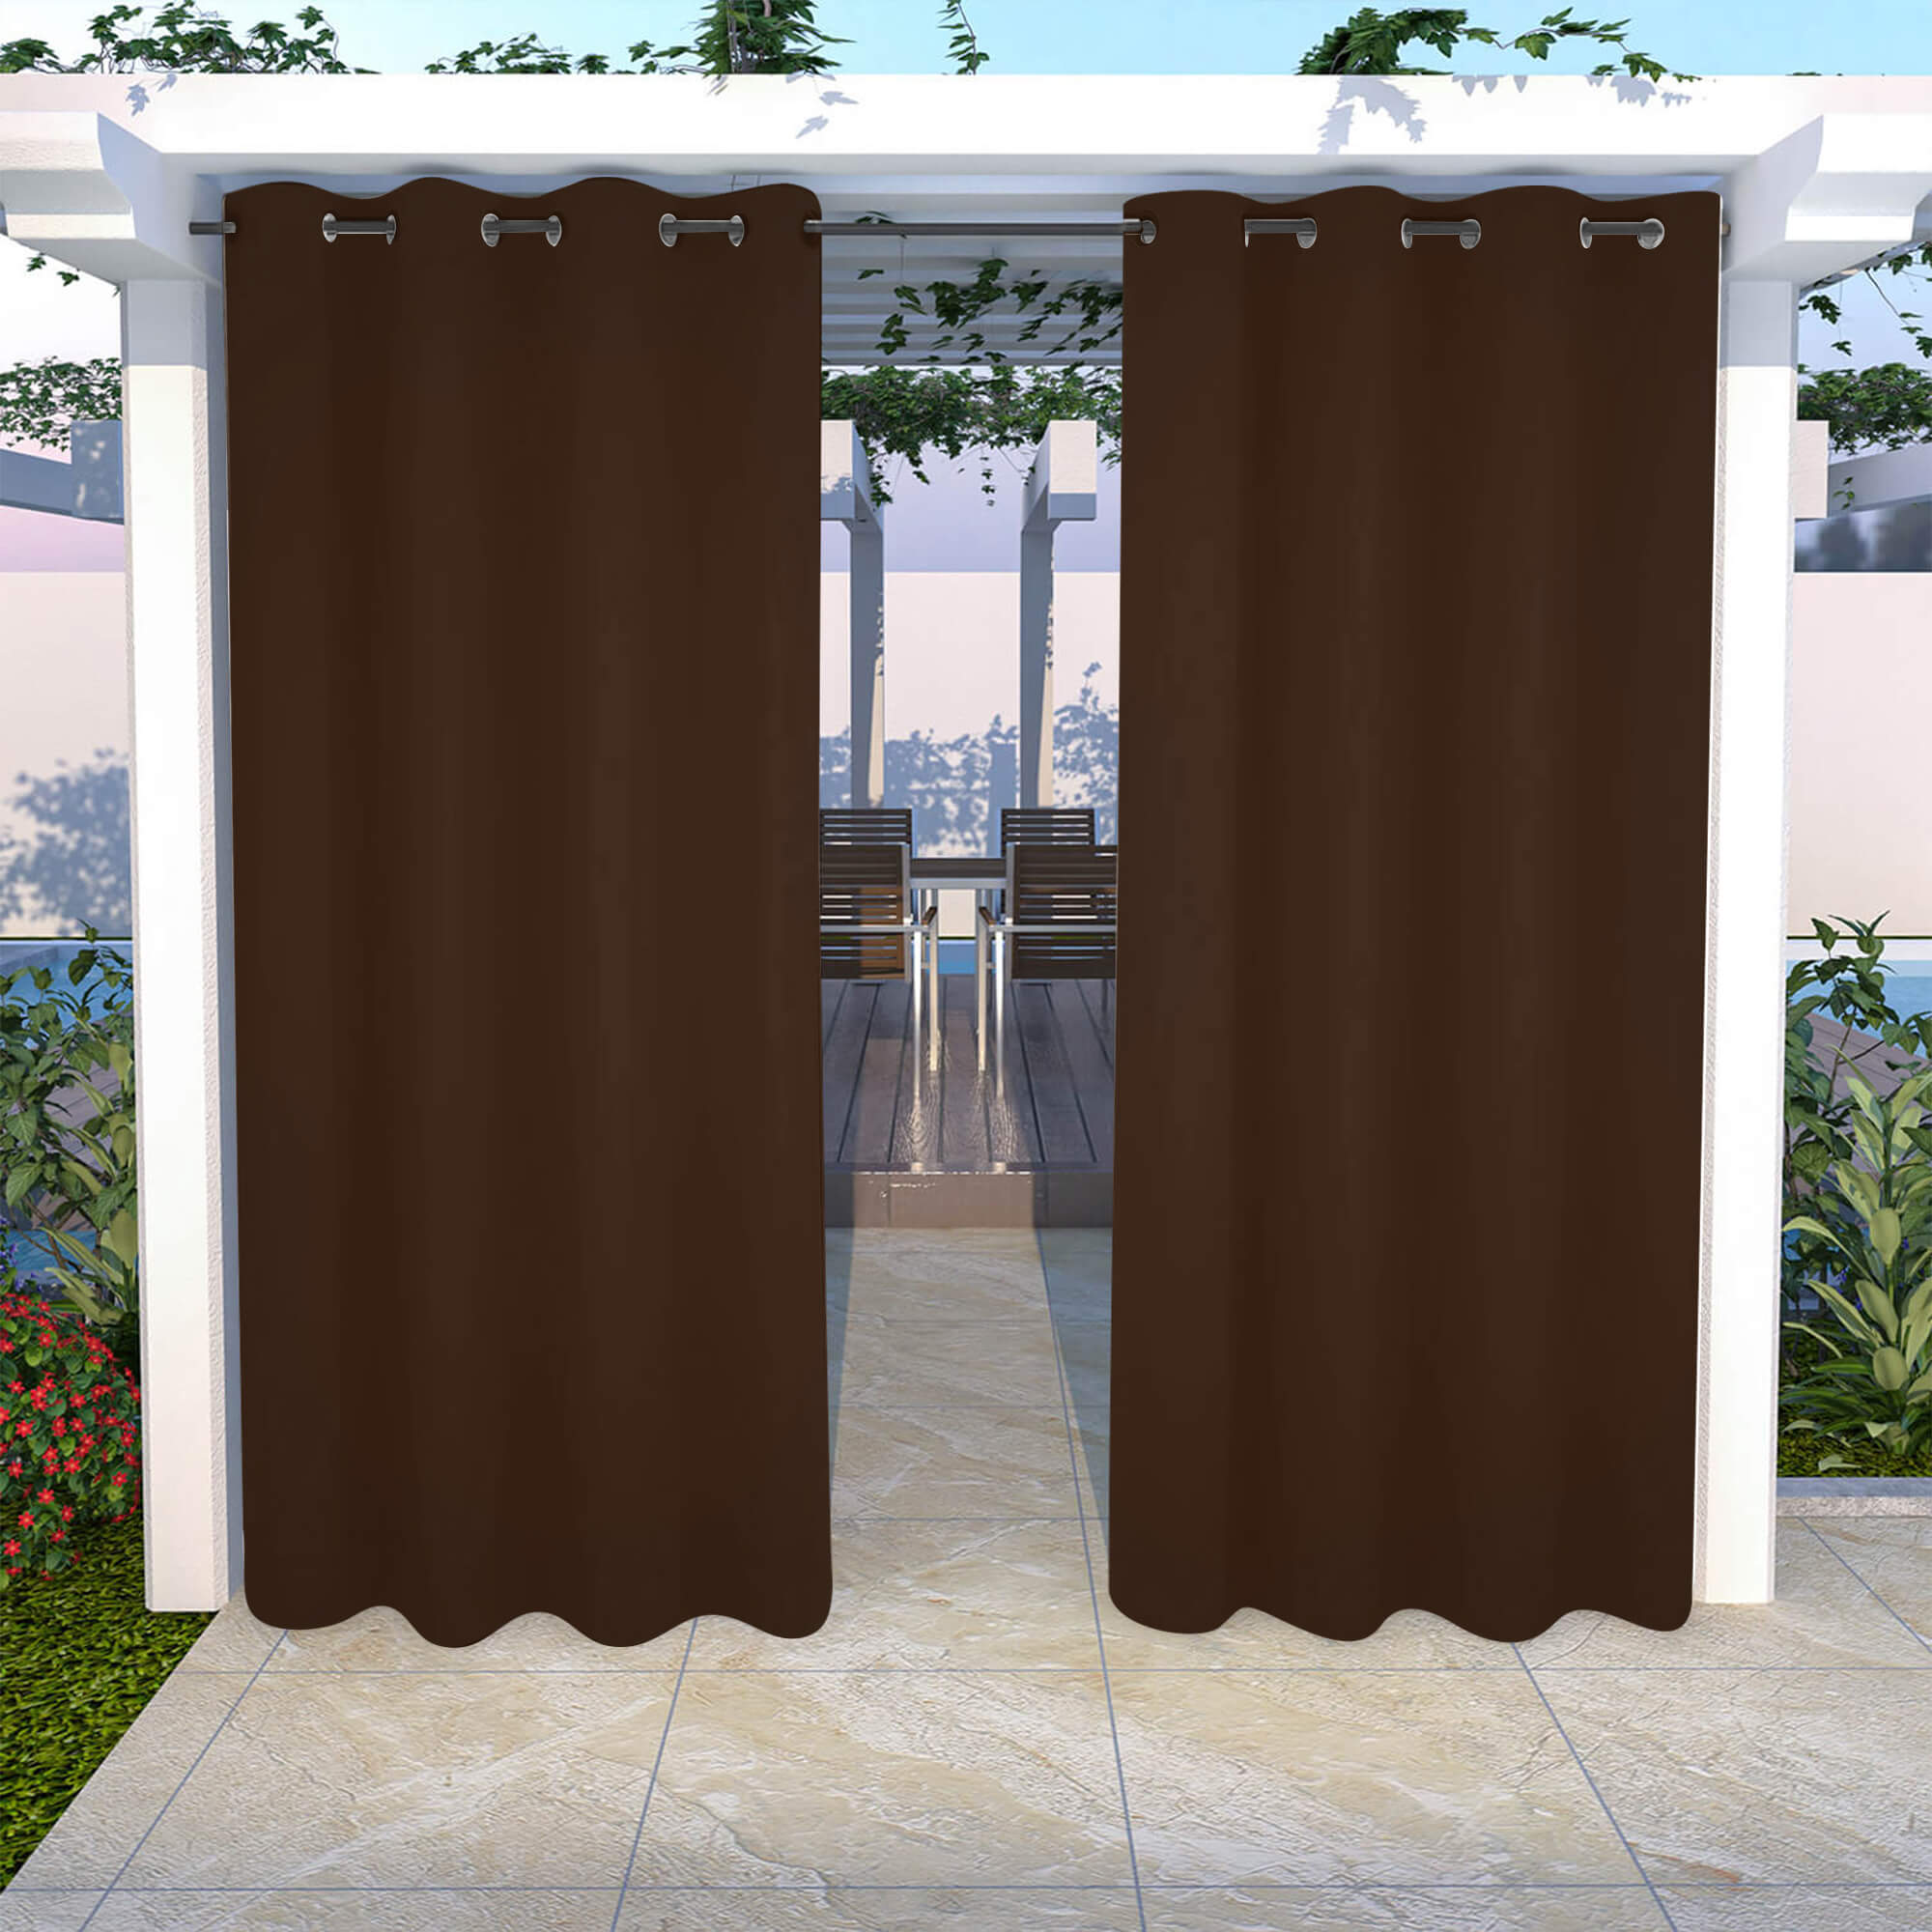 Snowcity Outdoor Curtains Waterproof Grommet Top 1 Panel - Dark Coffee